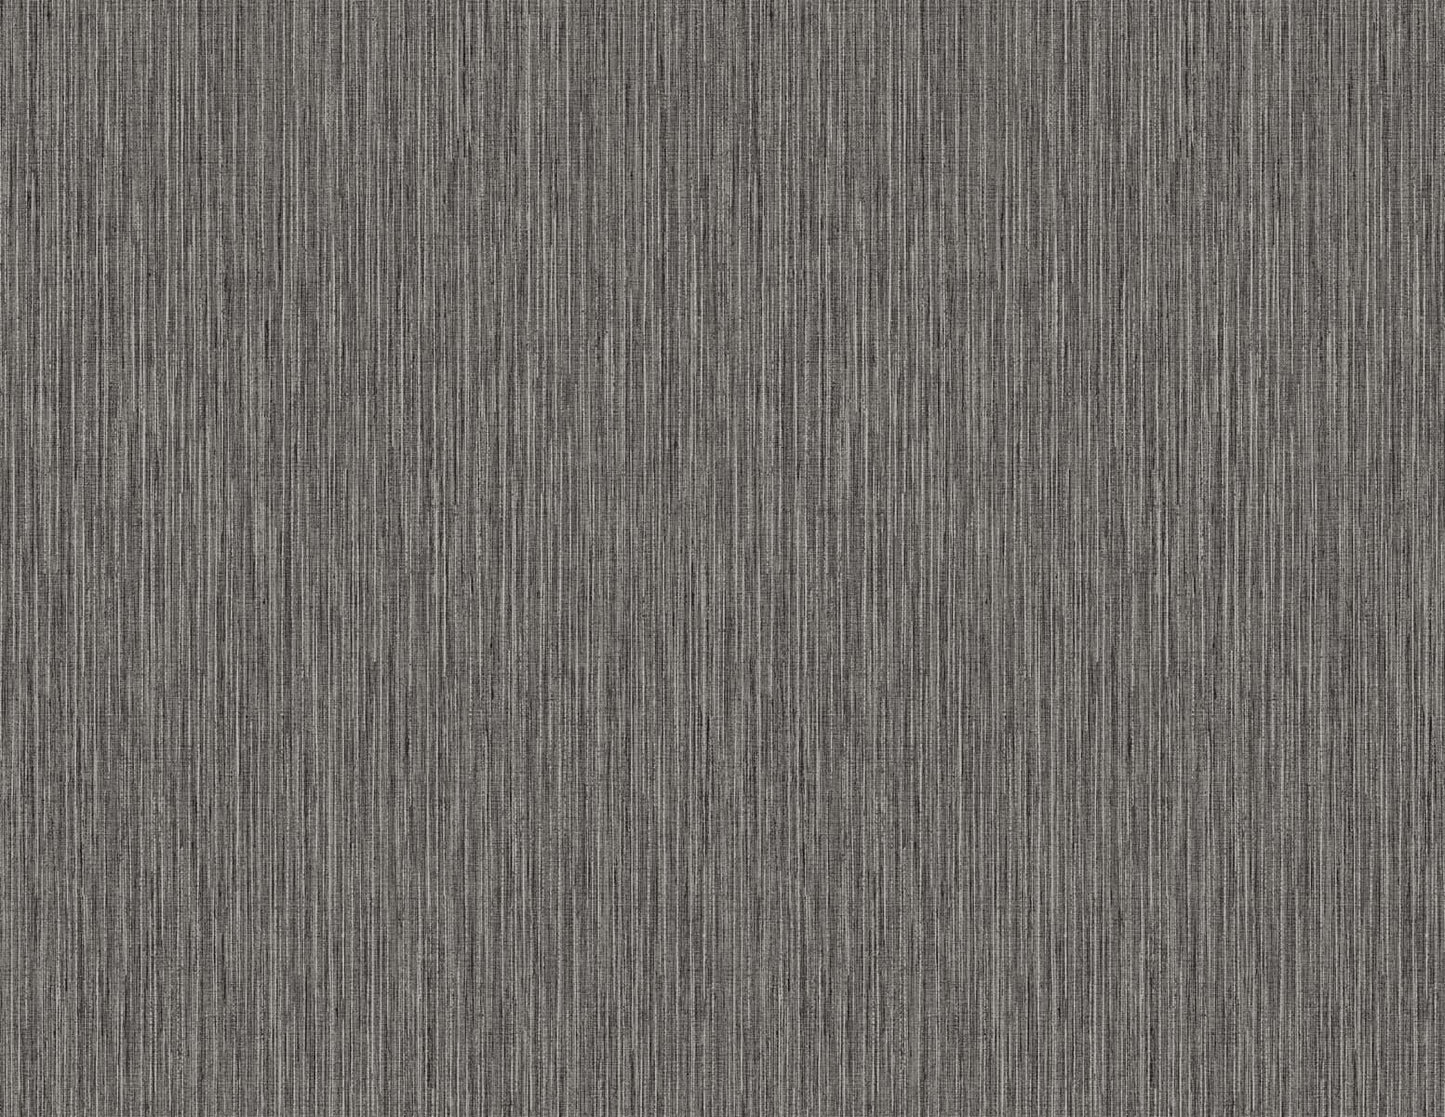 Seabrook Even More Textures Vertical Stria Wallpaper - Graphite & Metallic Silver